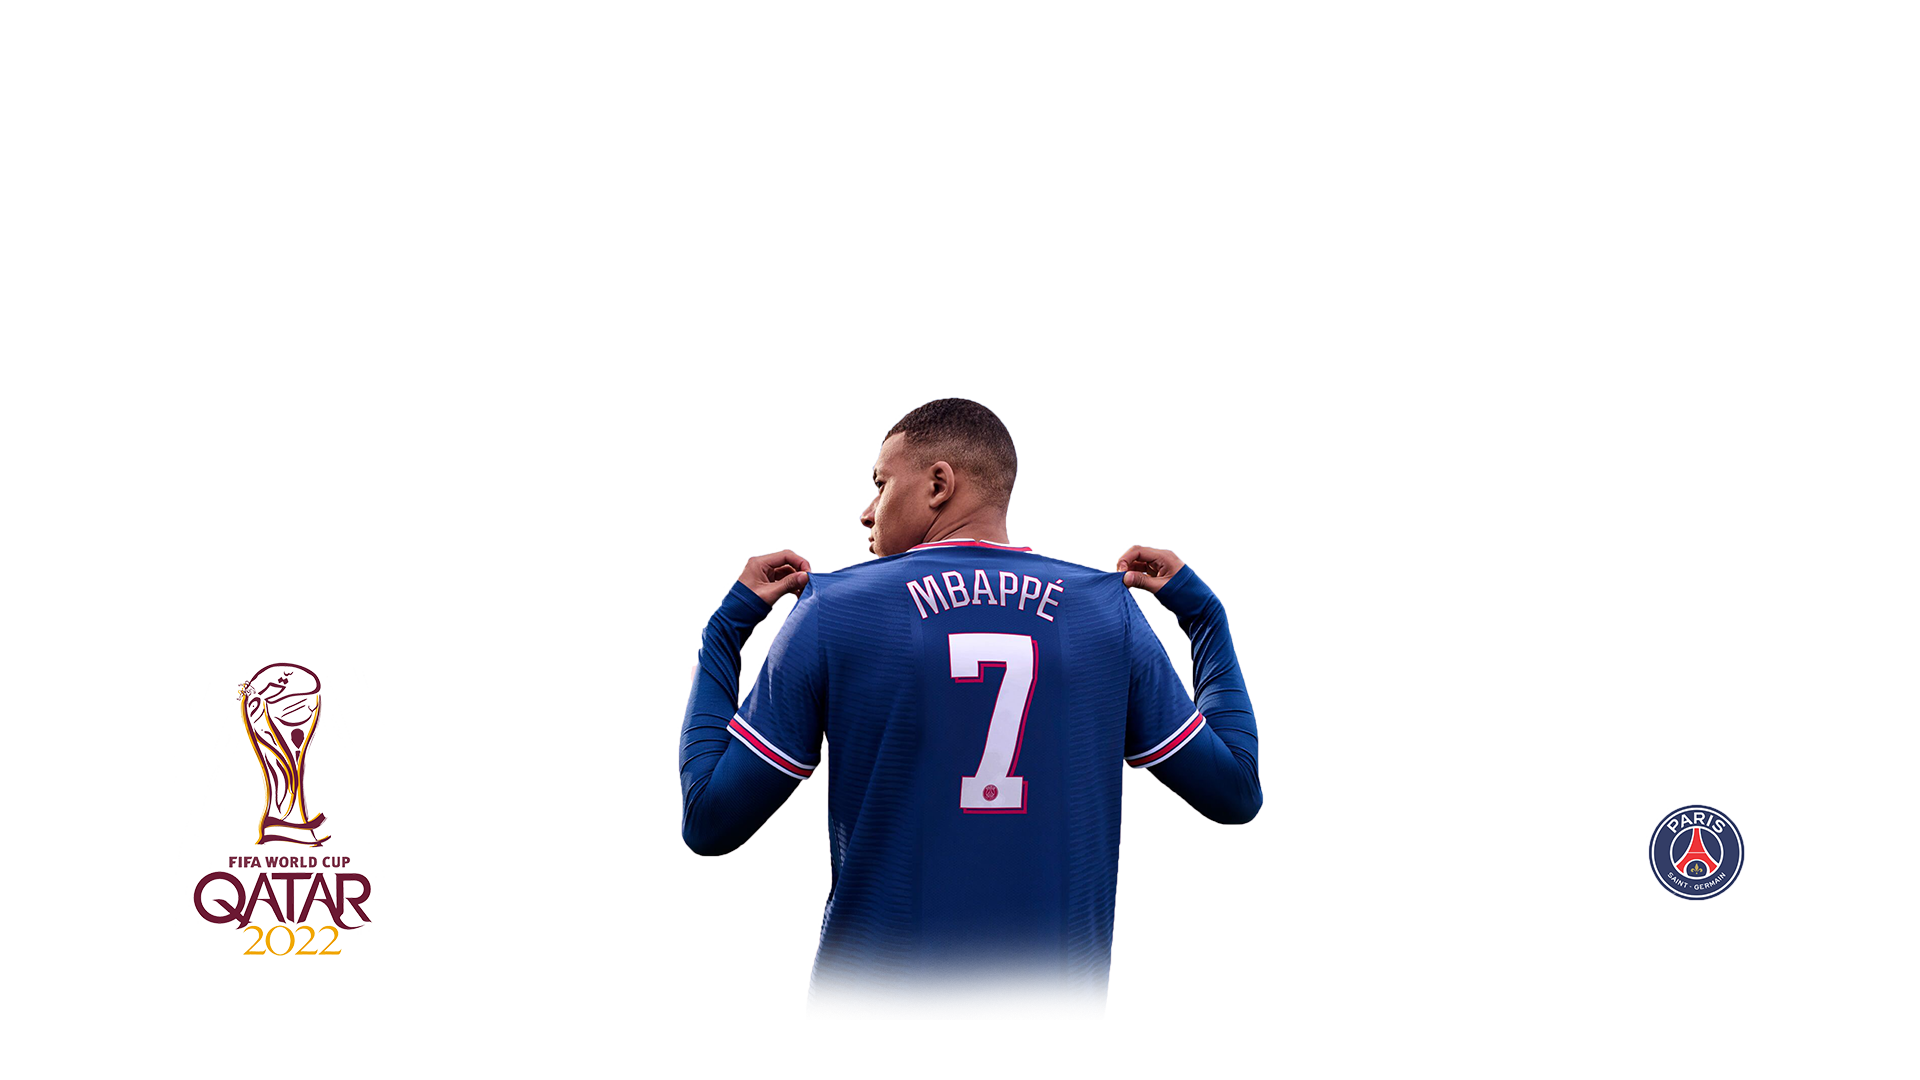 Download Fifa 23 Mobile